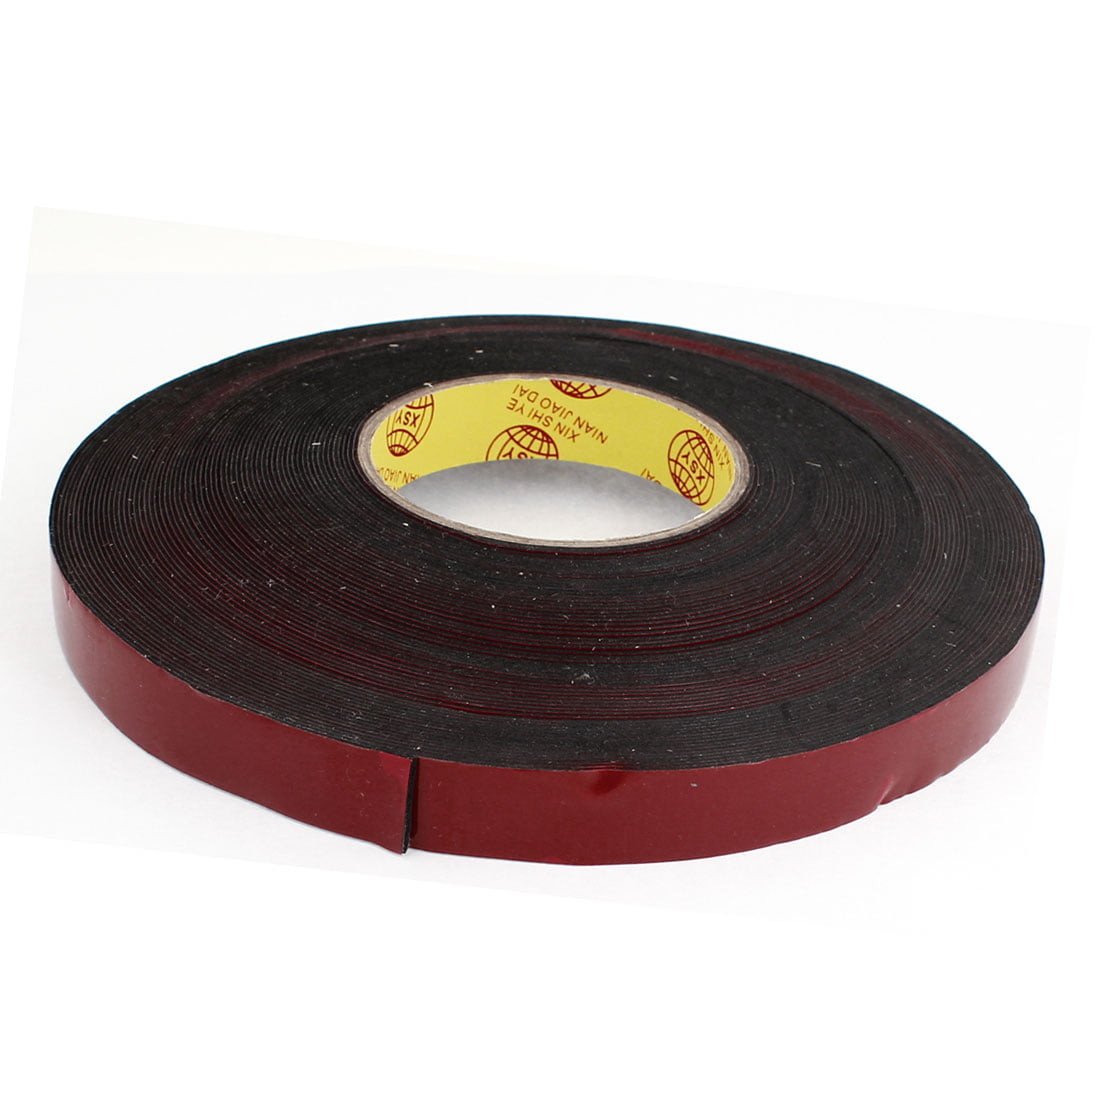 3M VHB Tape 4611F Discs x 5 Perfect for dash cam electrical repair DIY craft 